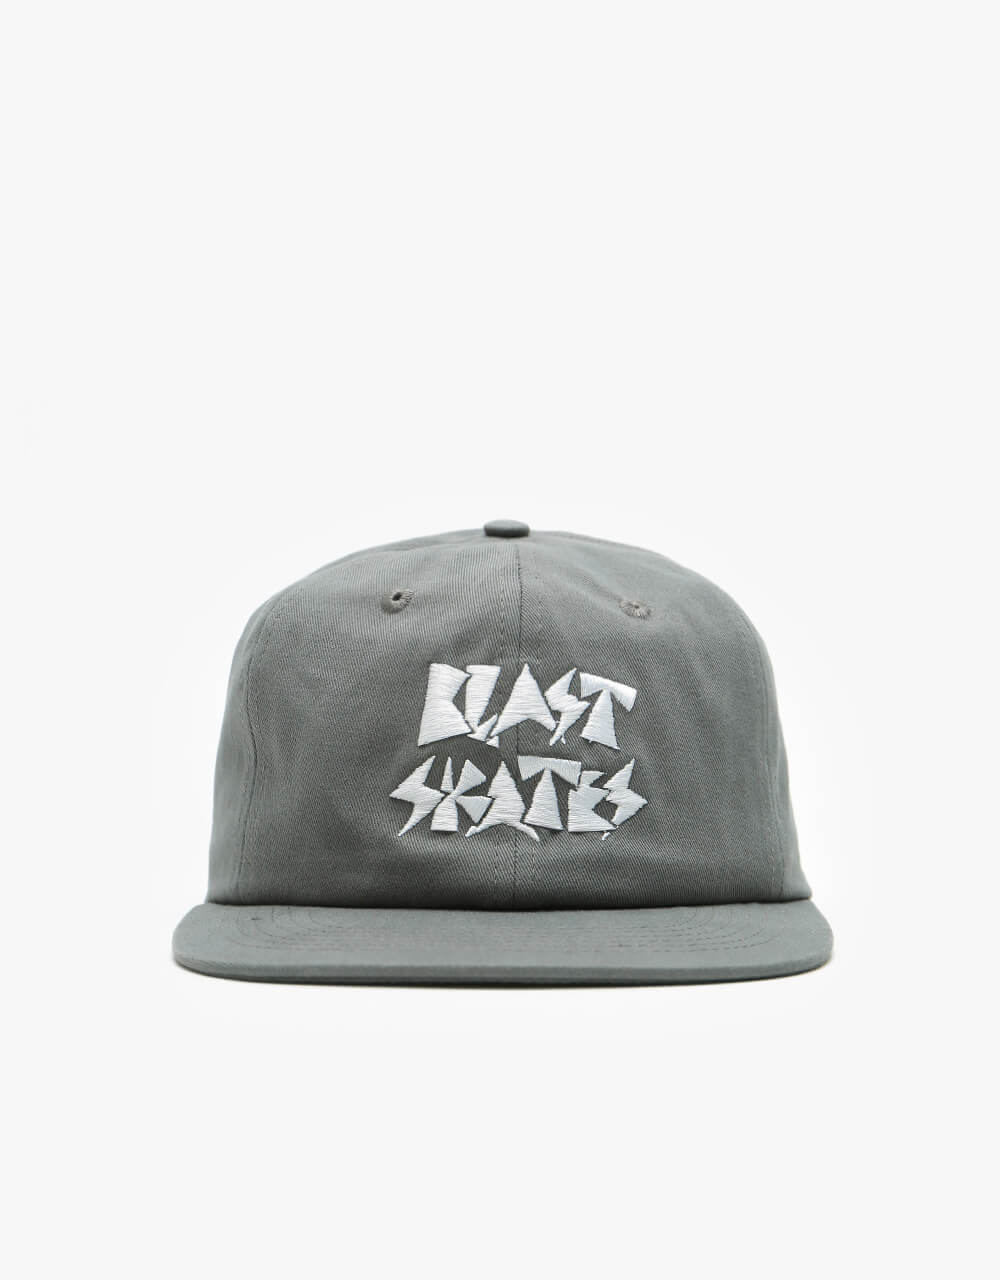 Blast Smasher Embroidered Snapback Cap - Black